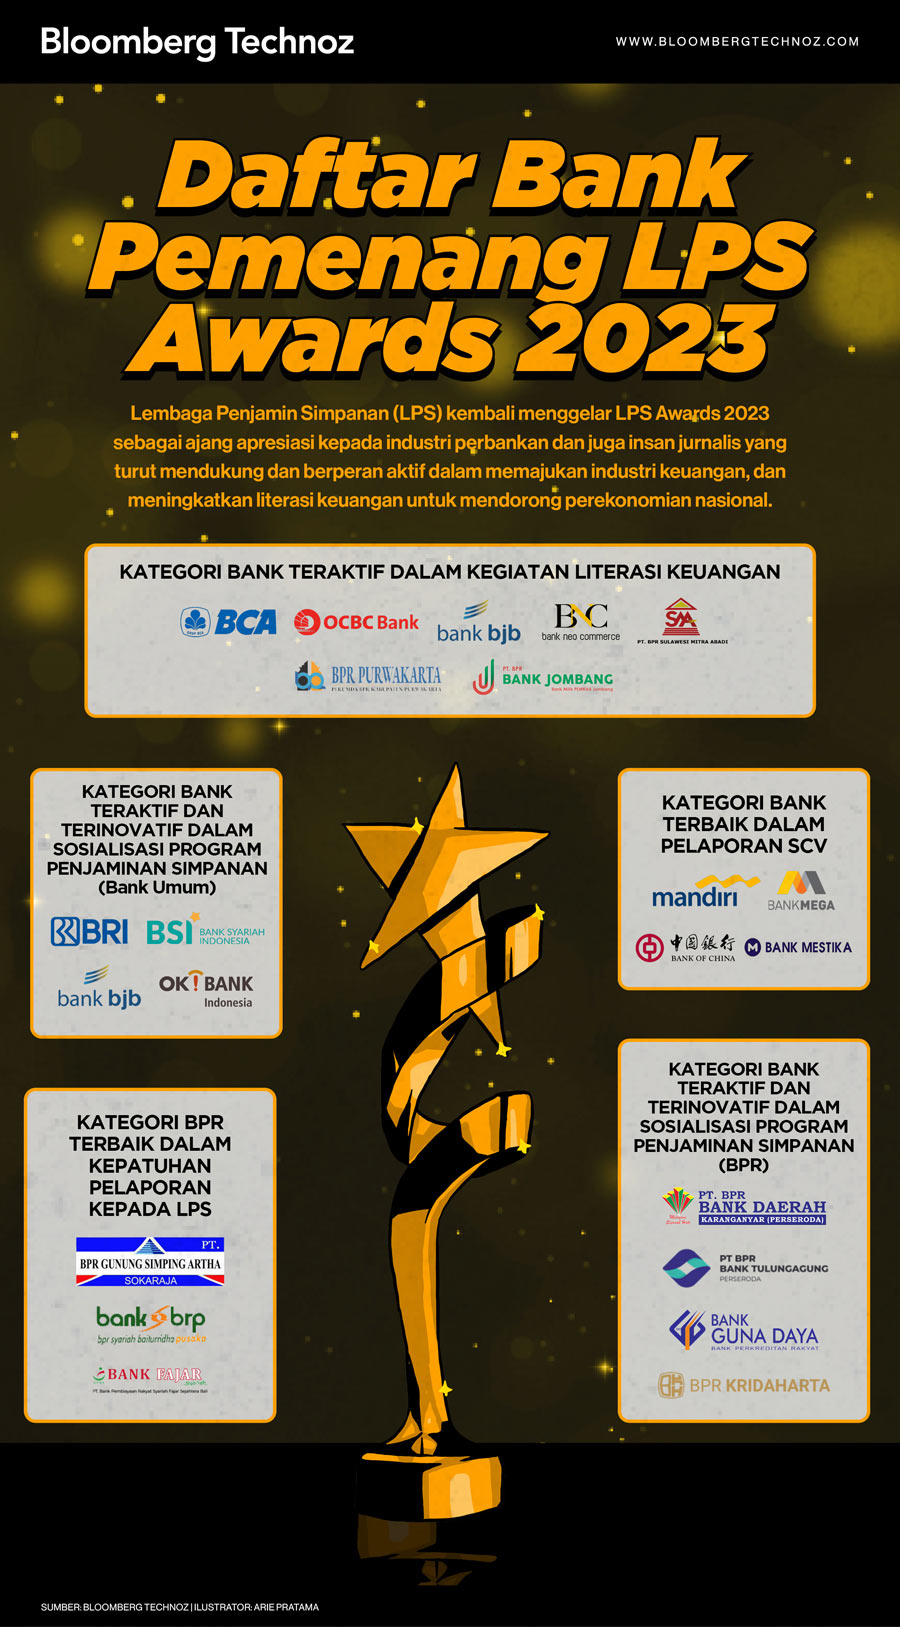 Daftar Bank Pemenang LPS Awards 2023 (Arie Pratama/Bloomberg Technoz)